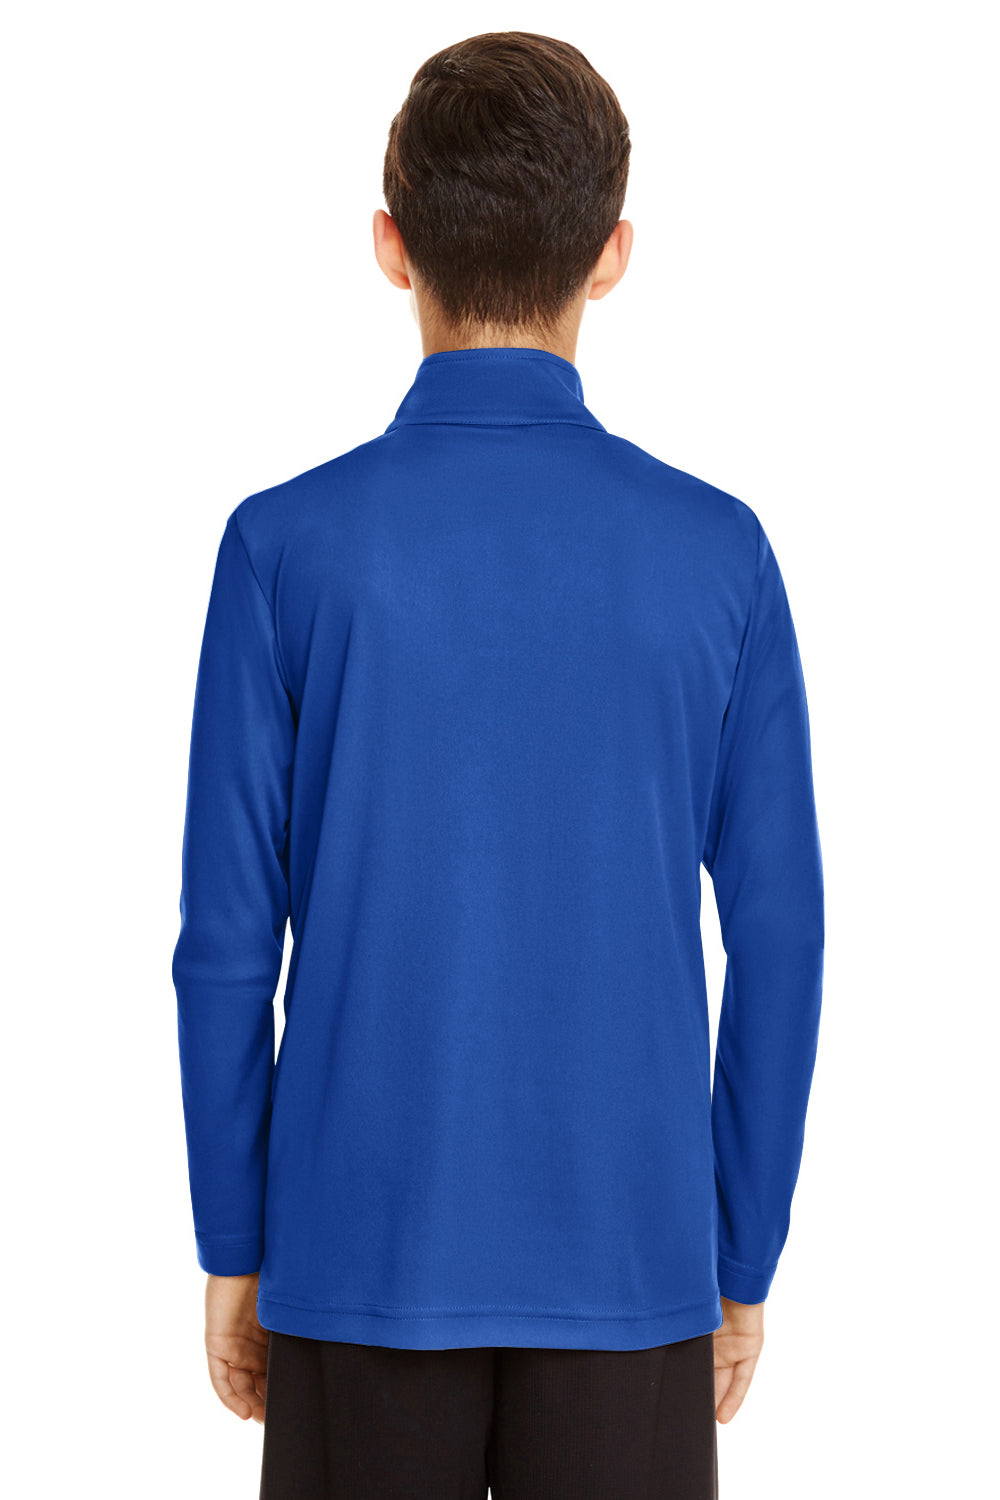 Team 365 TT31Y Youth Zone Performance Moisture Wicking 1/4 Zip Sweatshirt Royal Blue Back